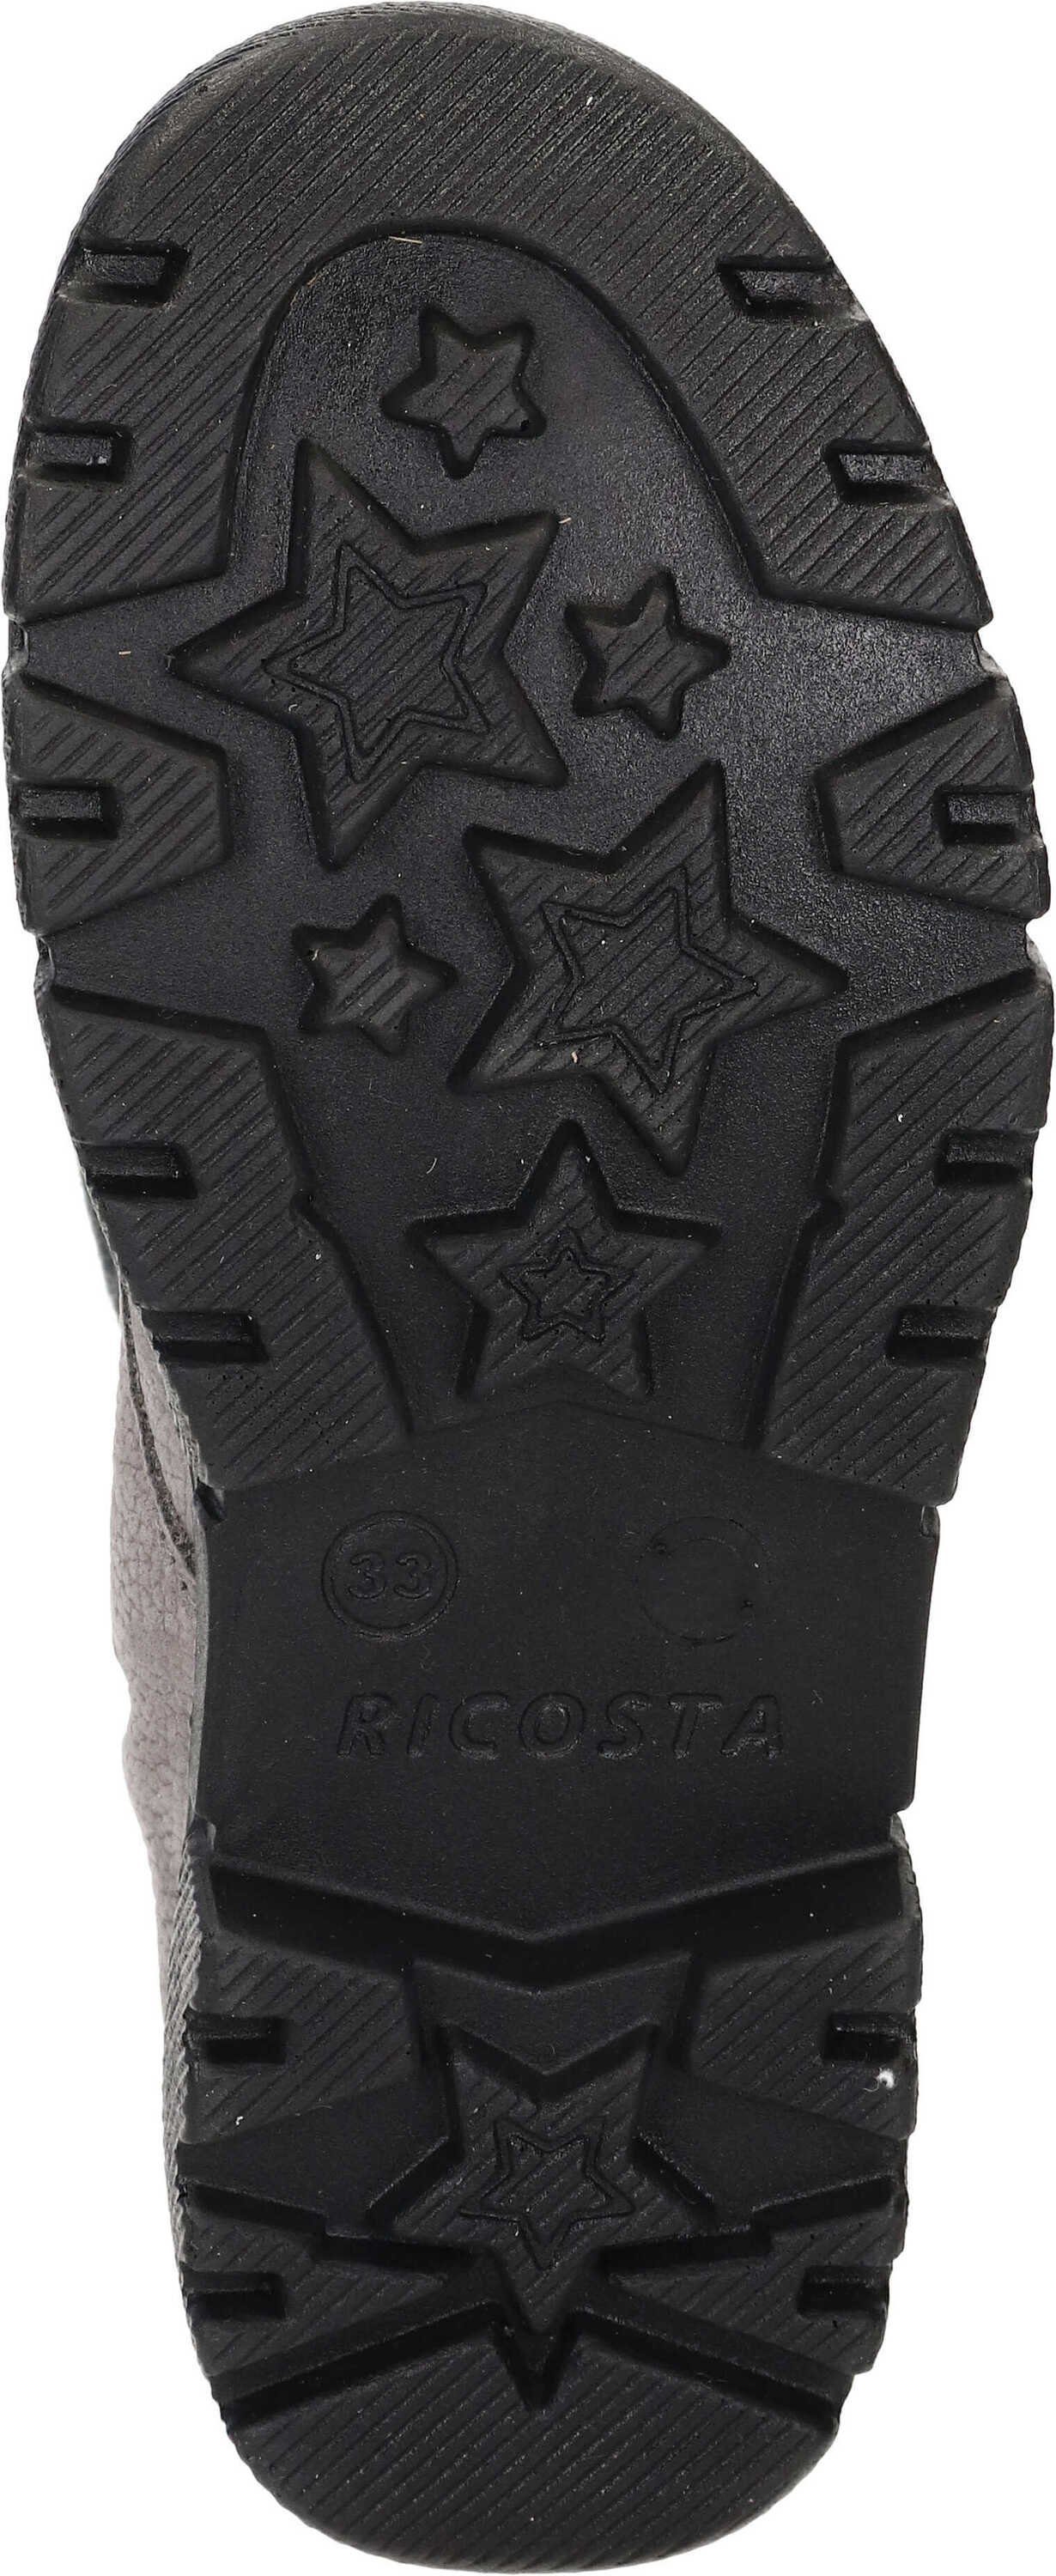 Ricosta mit Stiefel RICOSTA-TEX Stiefel